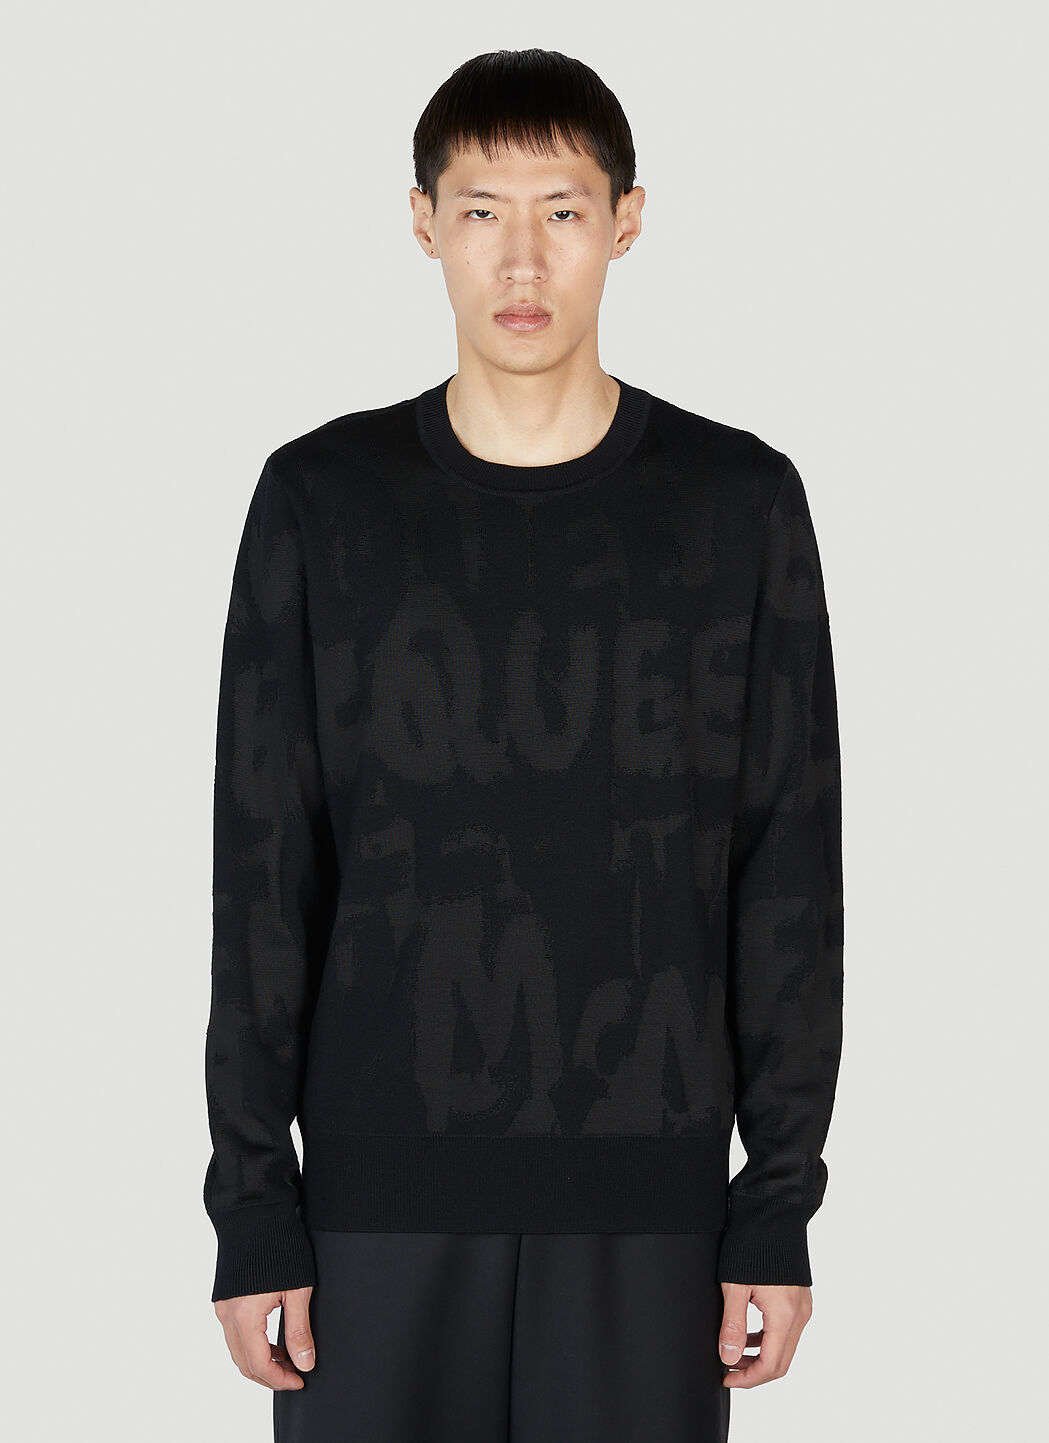 Alexander McQueen 로고 스웨터 화이트 amq0149025